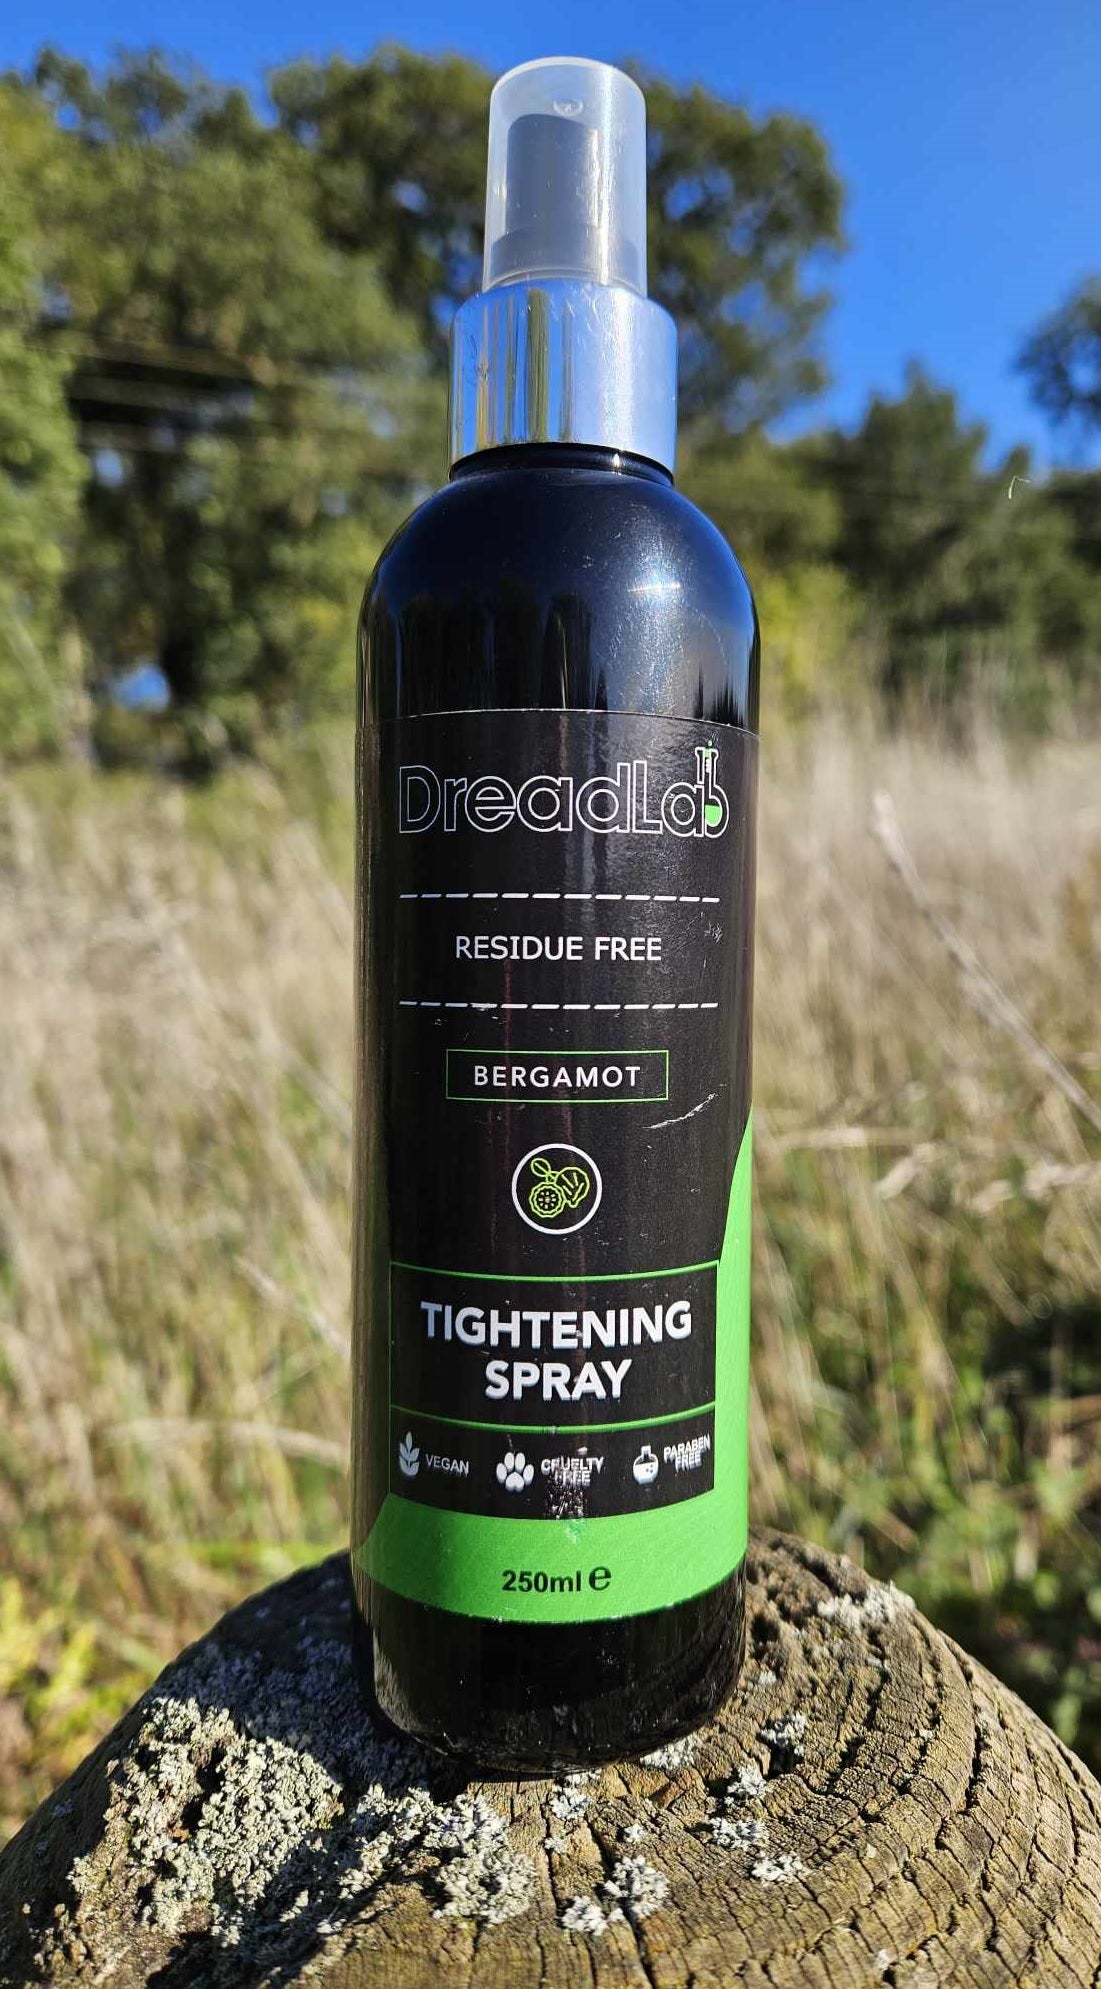 DreadLab - Dreadlocks Tightening Spray (250ml) Residue Free